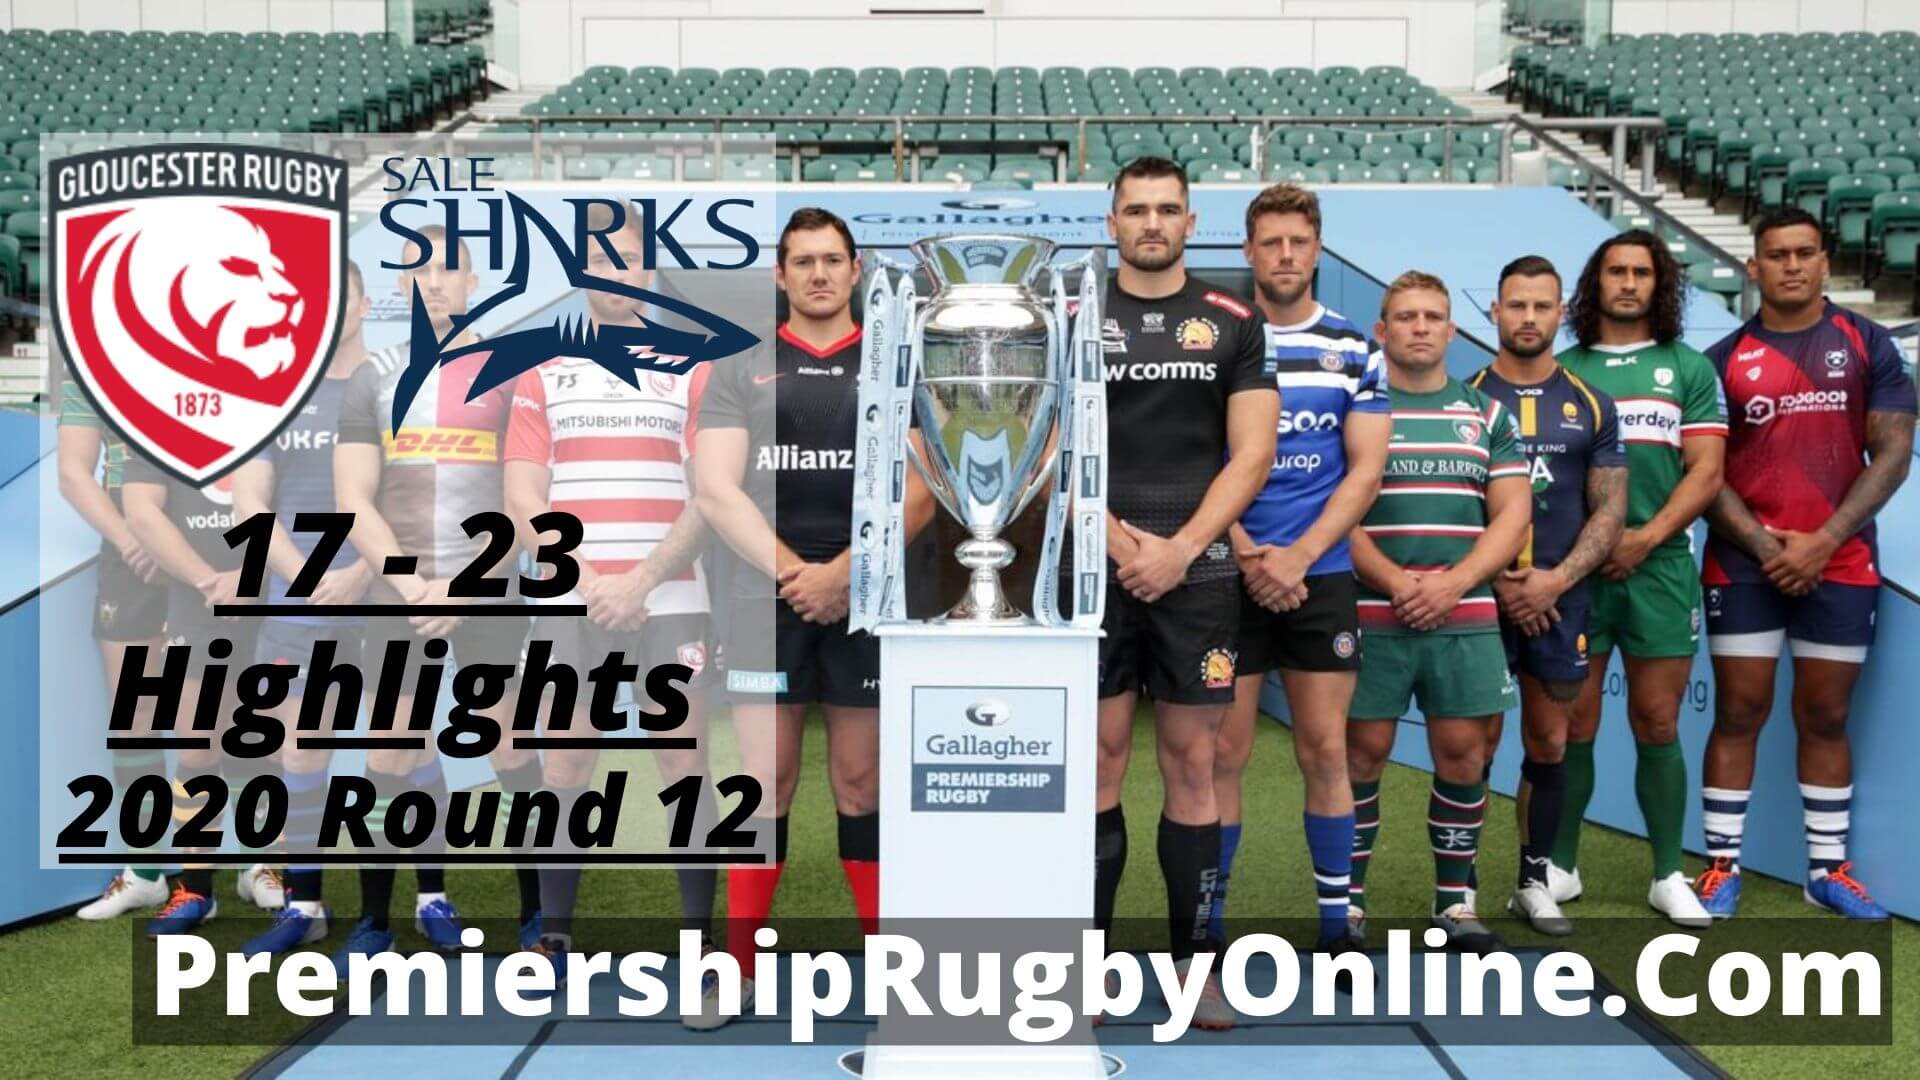 Gloucester Rugby Vs Sale Sharks Highlights 2020 RD 12